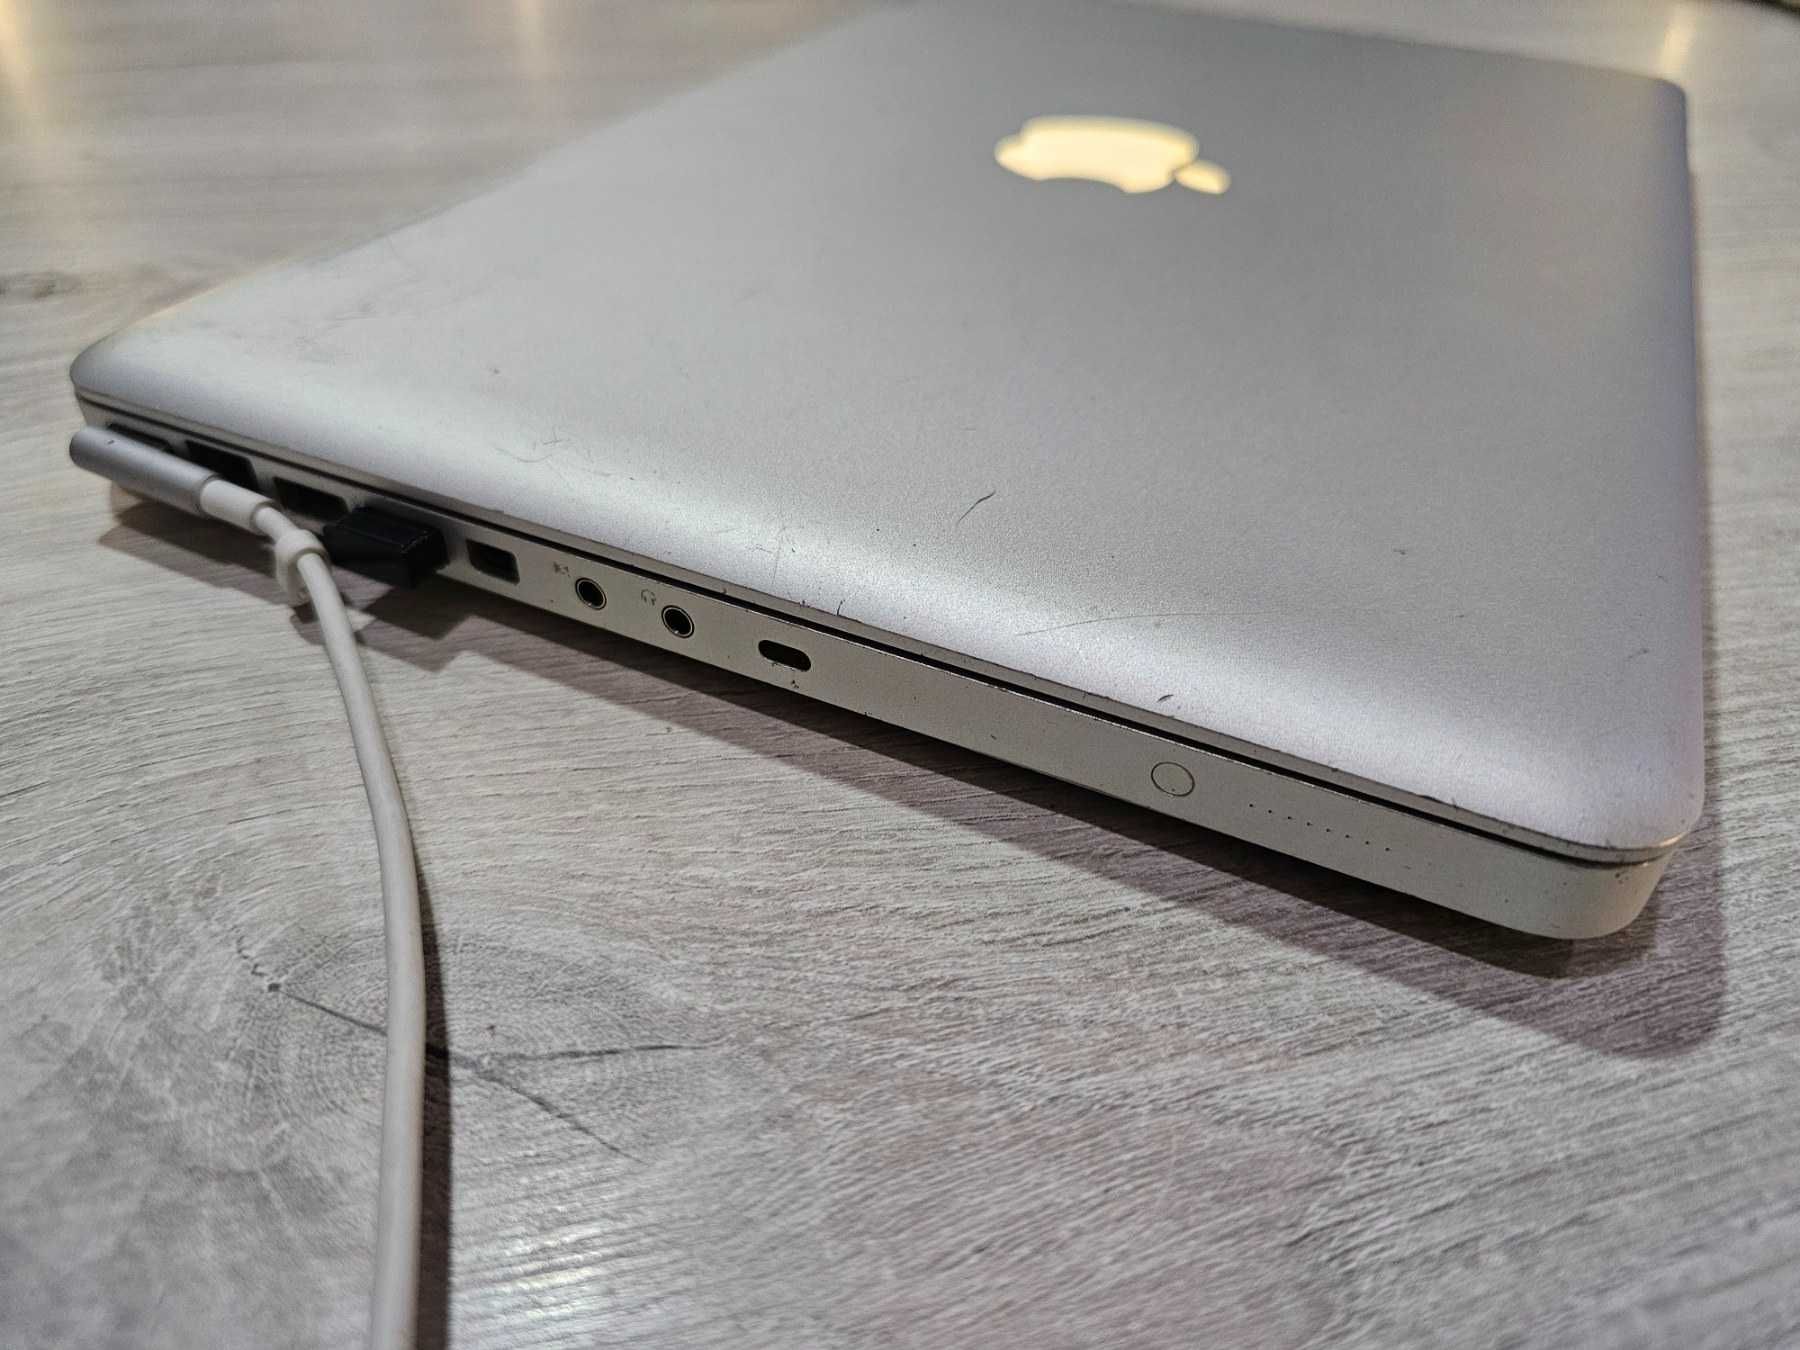 MacBook (13-inch, Aluminum, Late 2008)